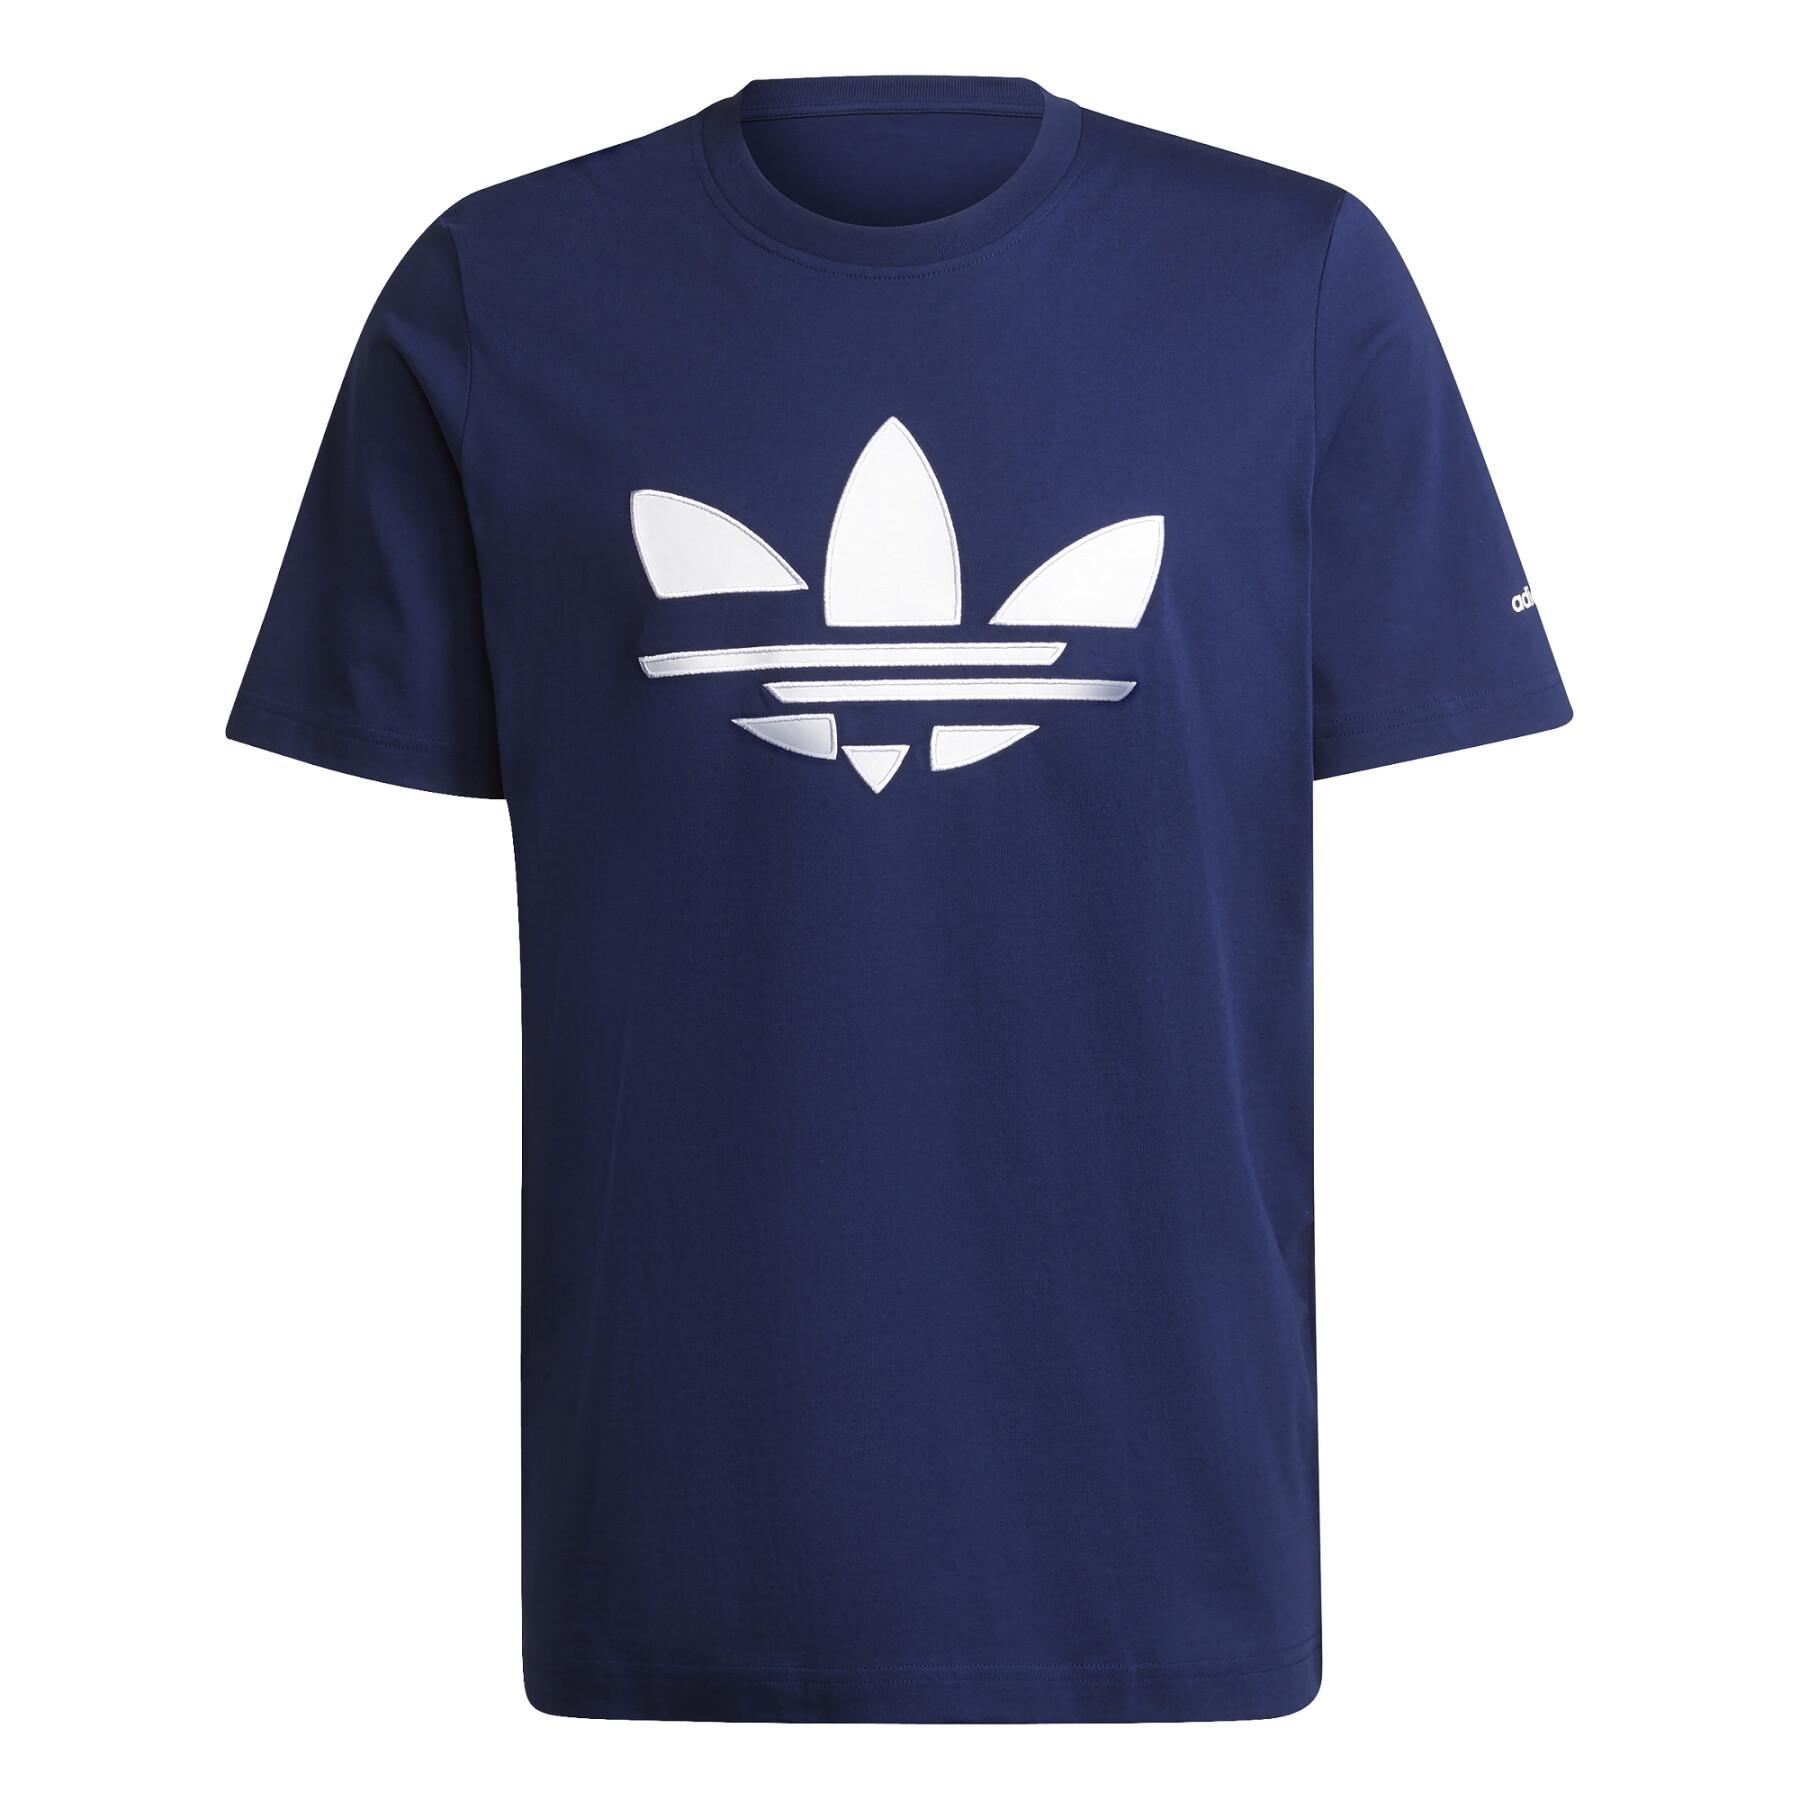 Koszulka adidas Originals Adicolor Trefoil